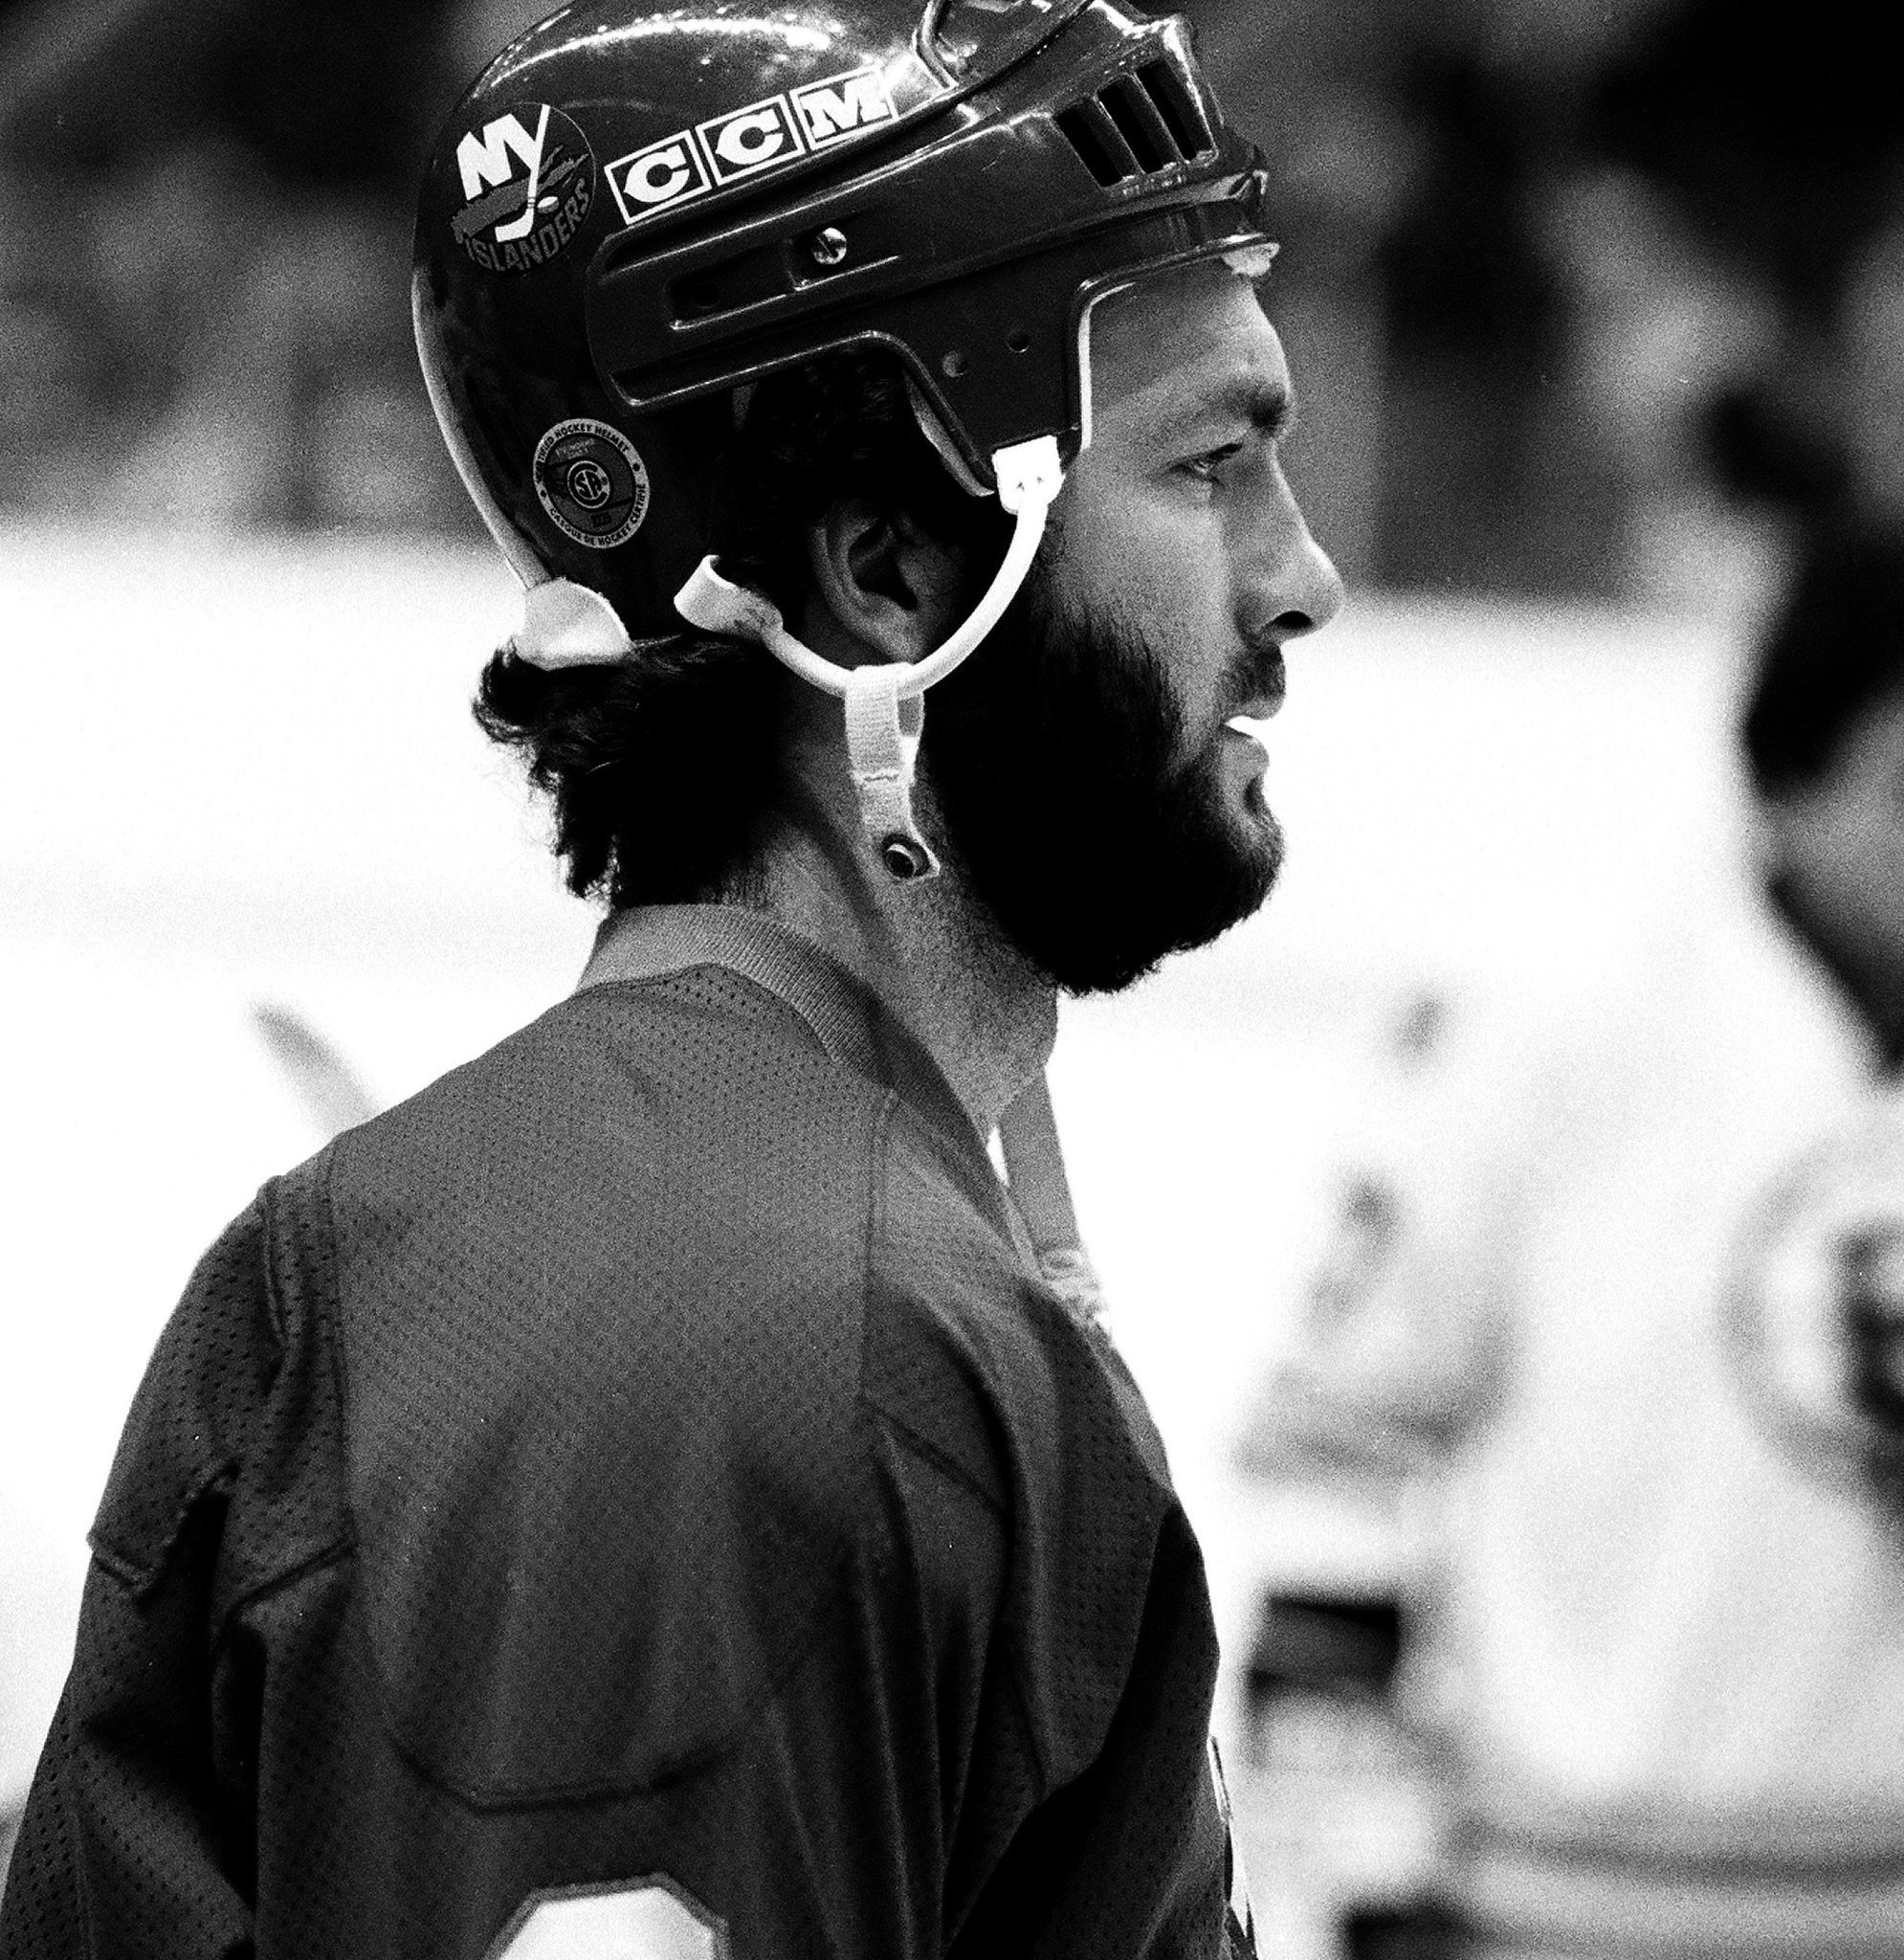 Playoff beards - Hockey's wackiest tradition - ESPN